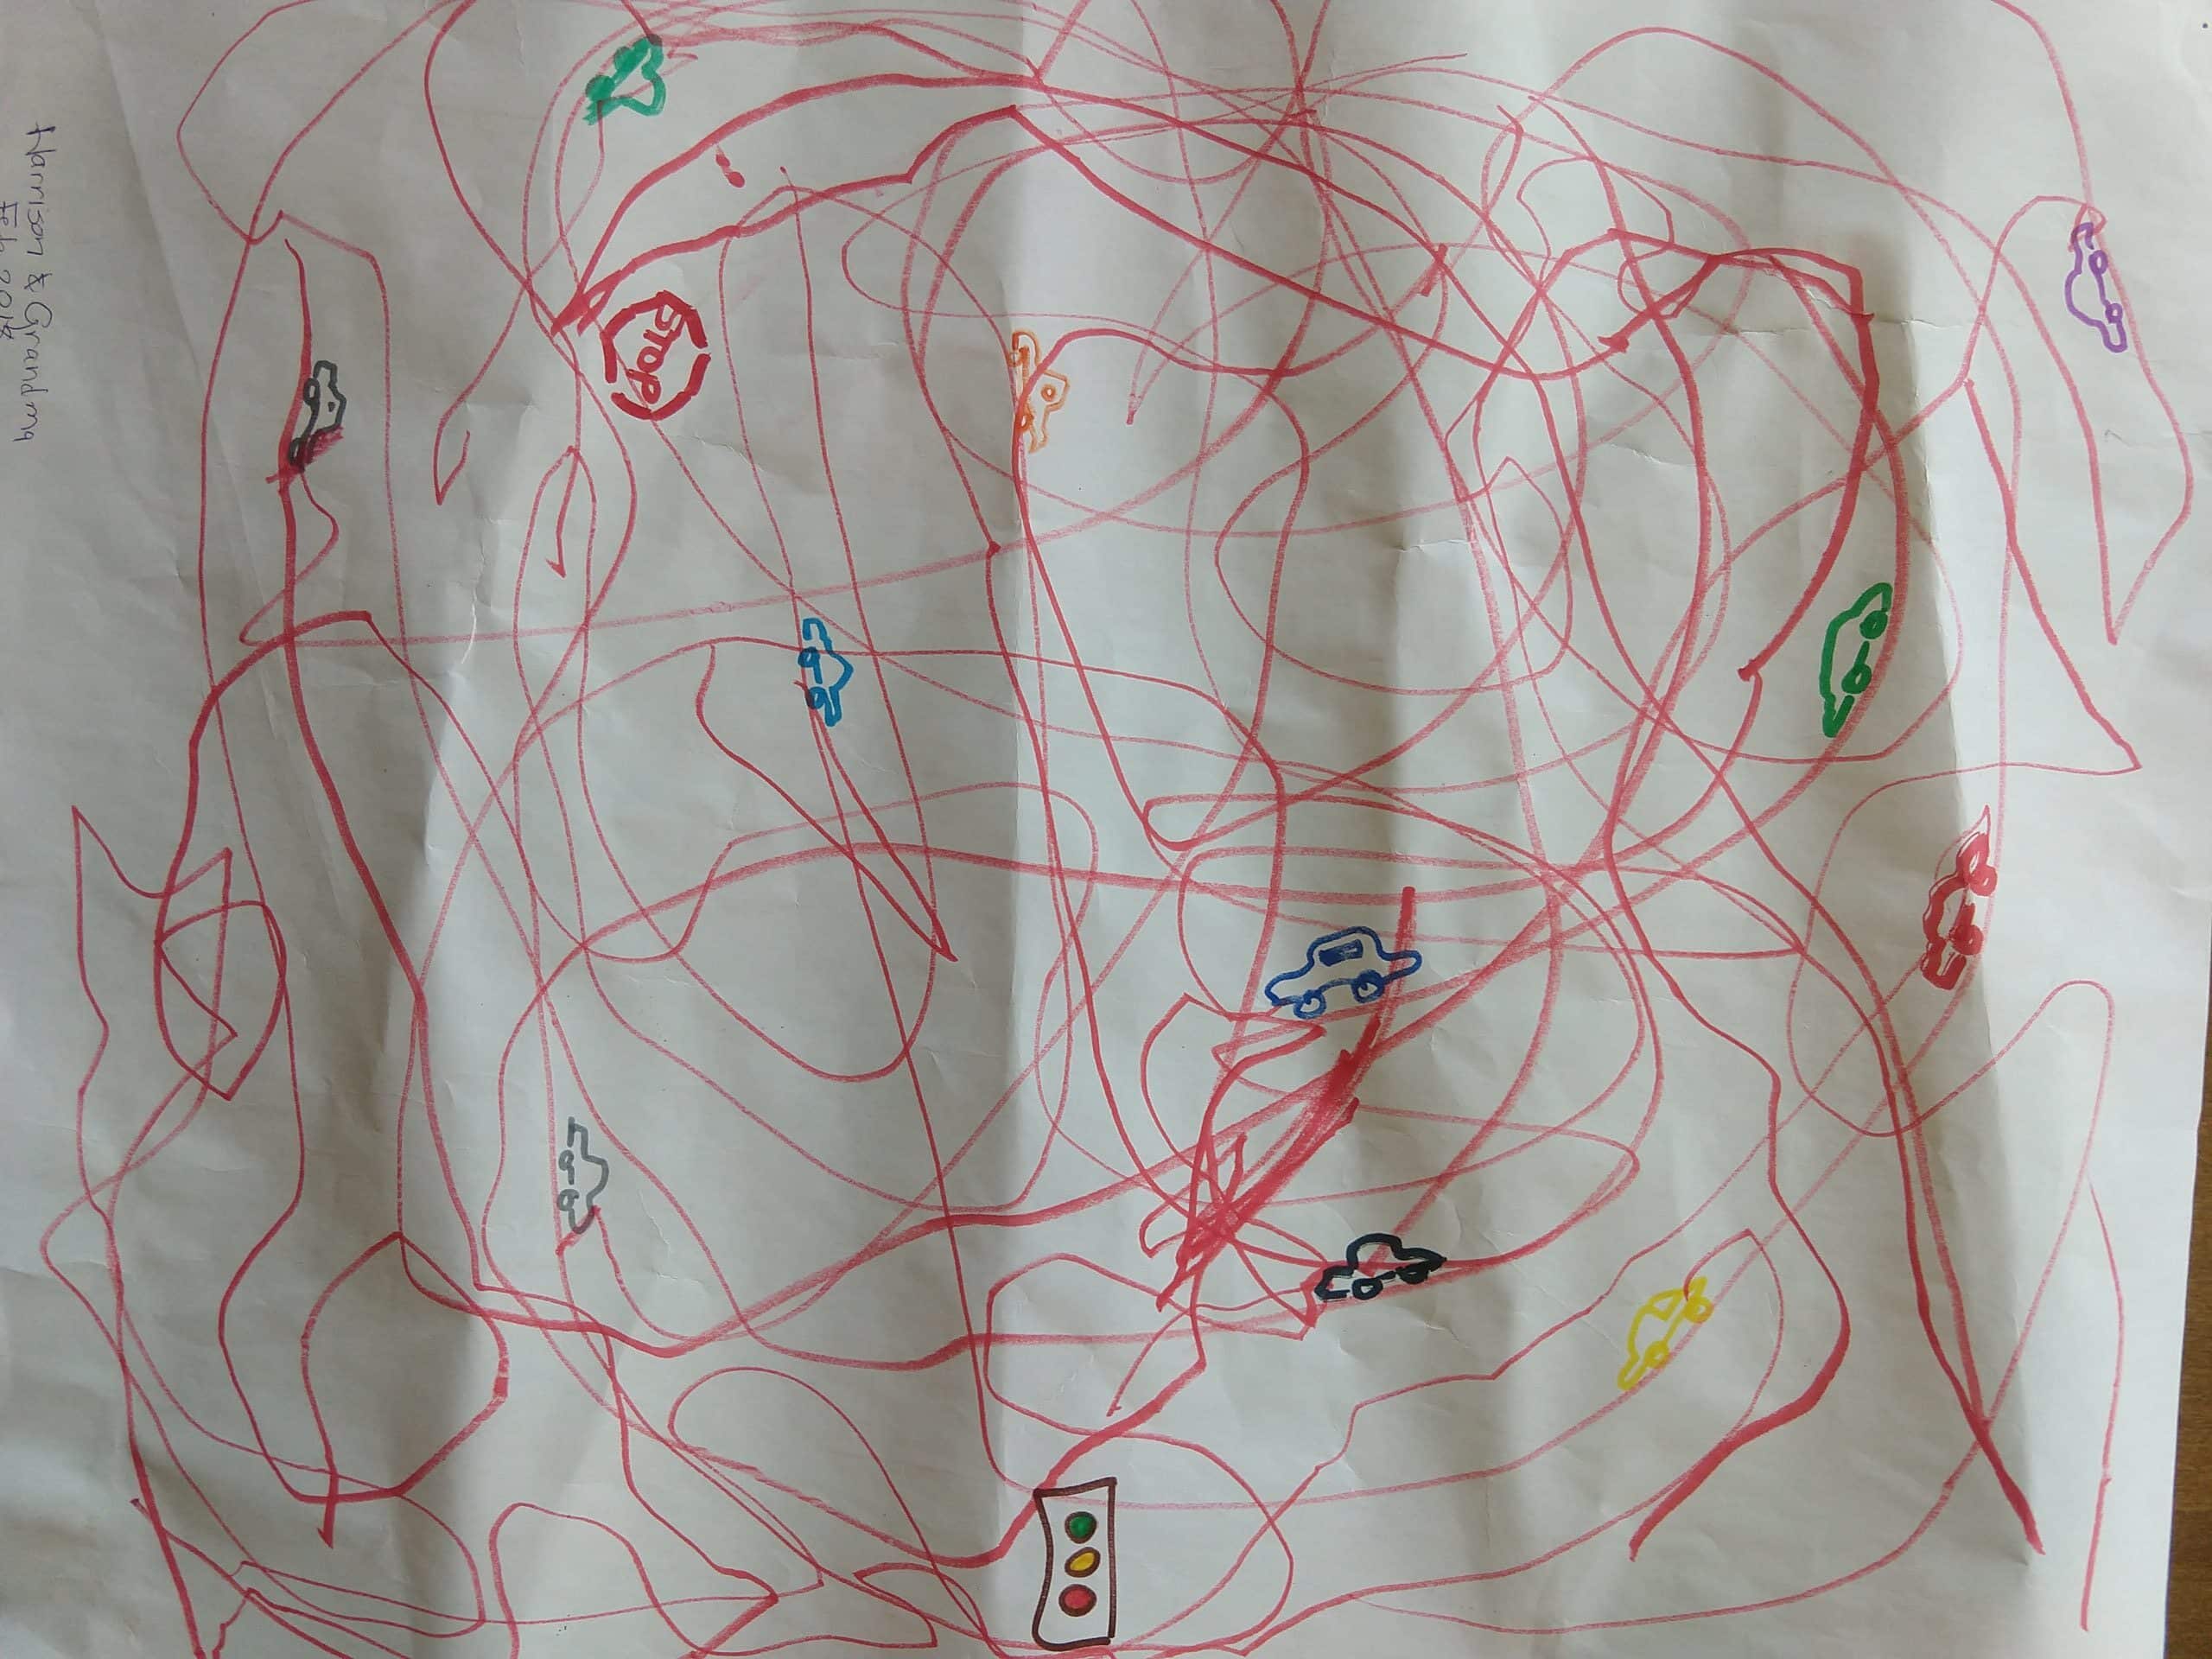 Grandson's image of tangled roads